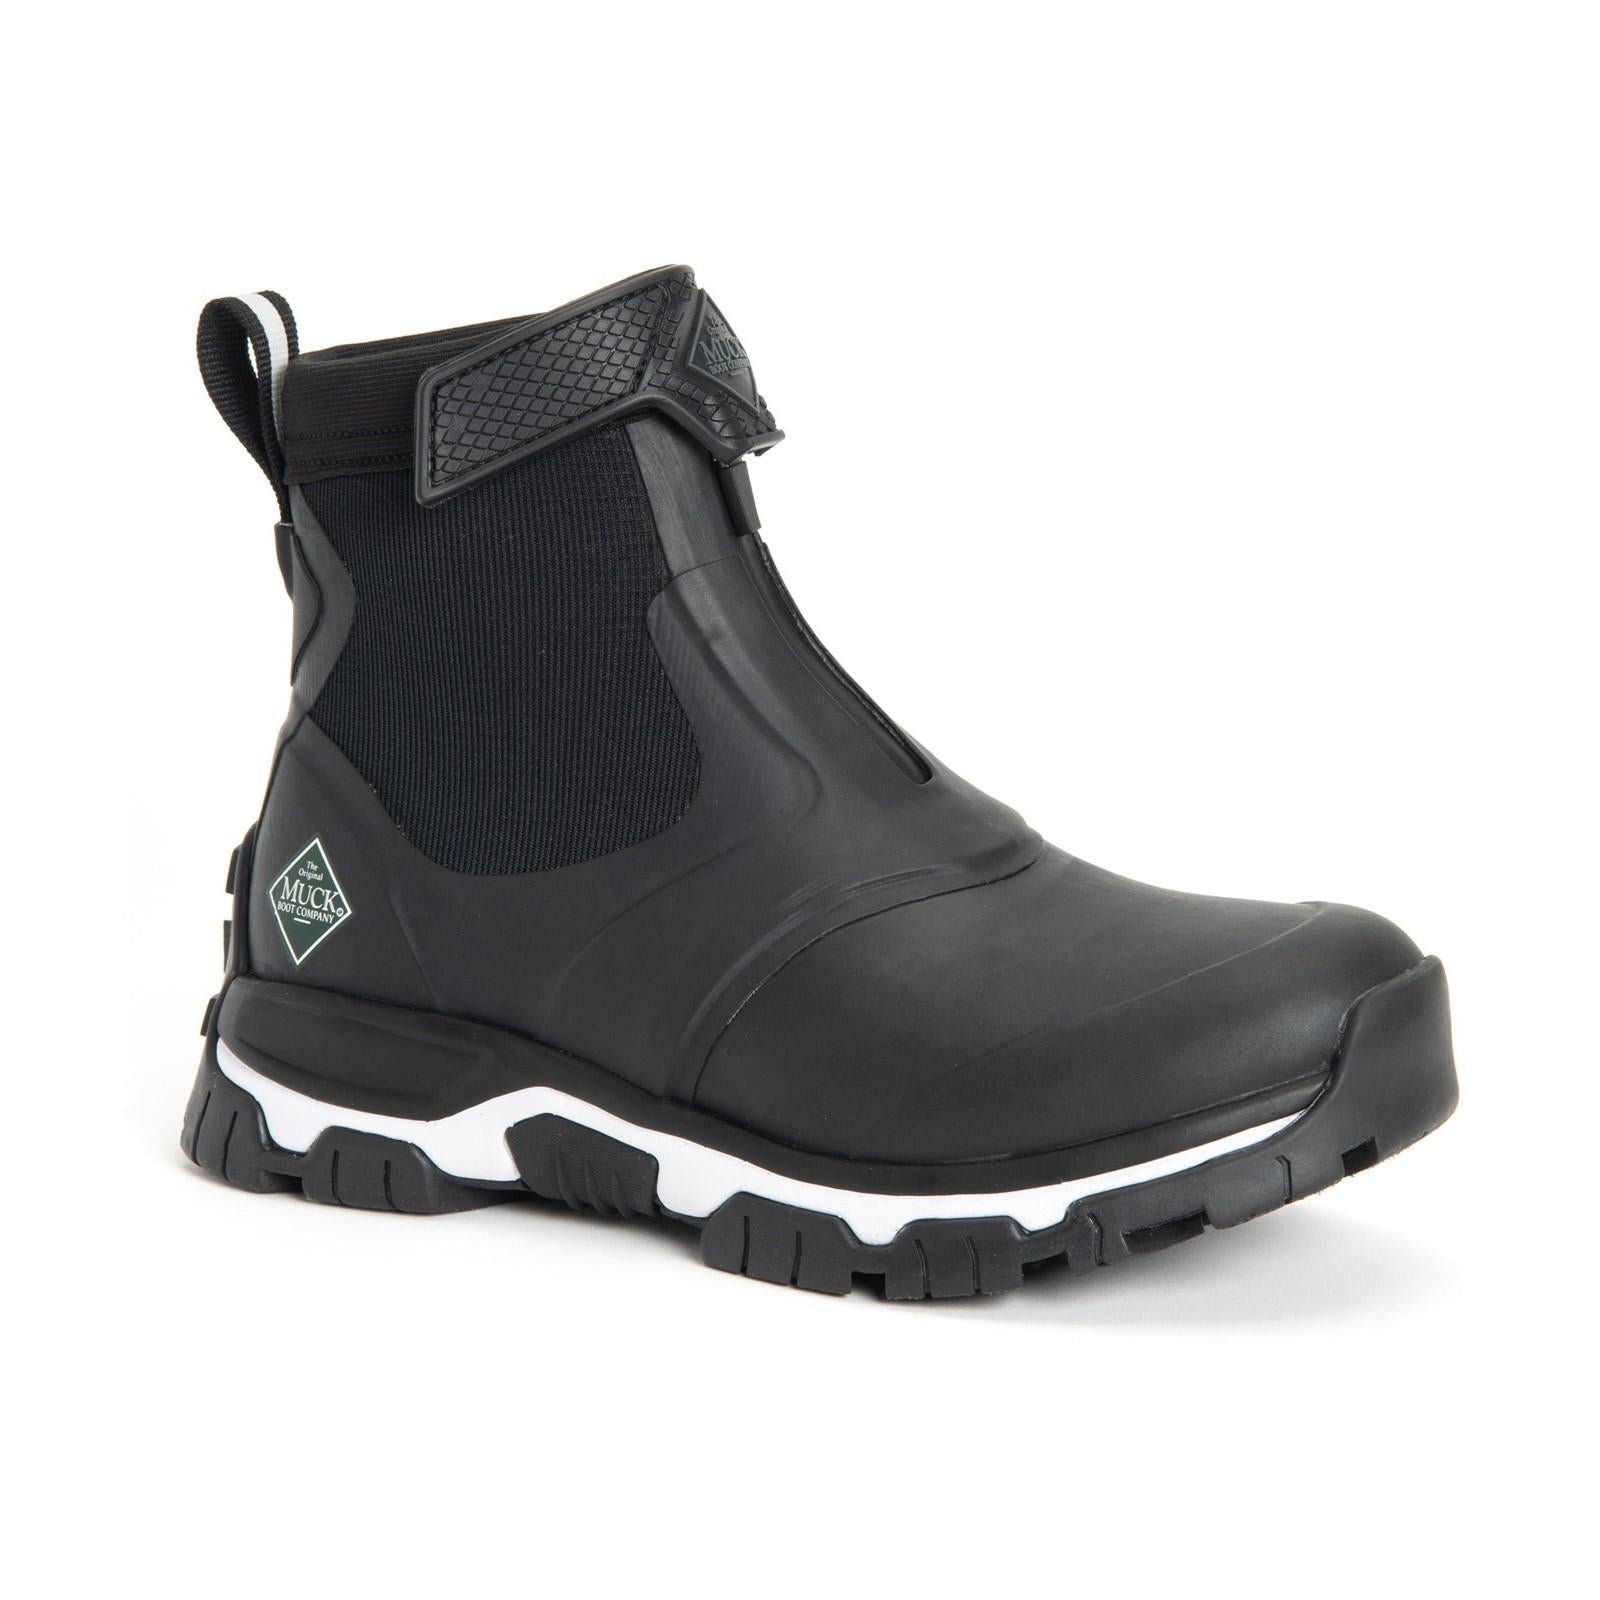 Muck Boots Apex Mid Zip ladies black waterproof breathable ankle boots